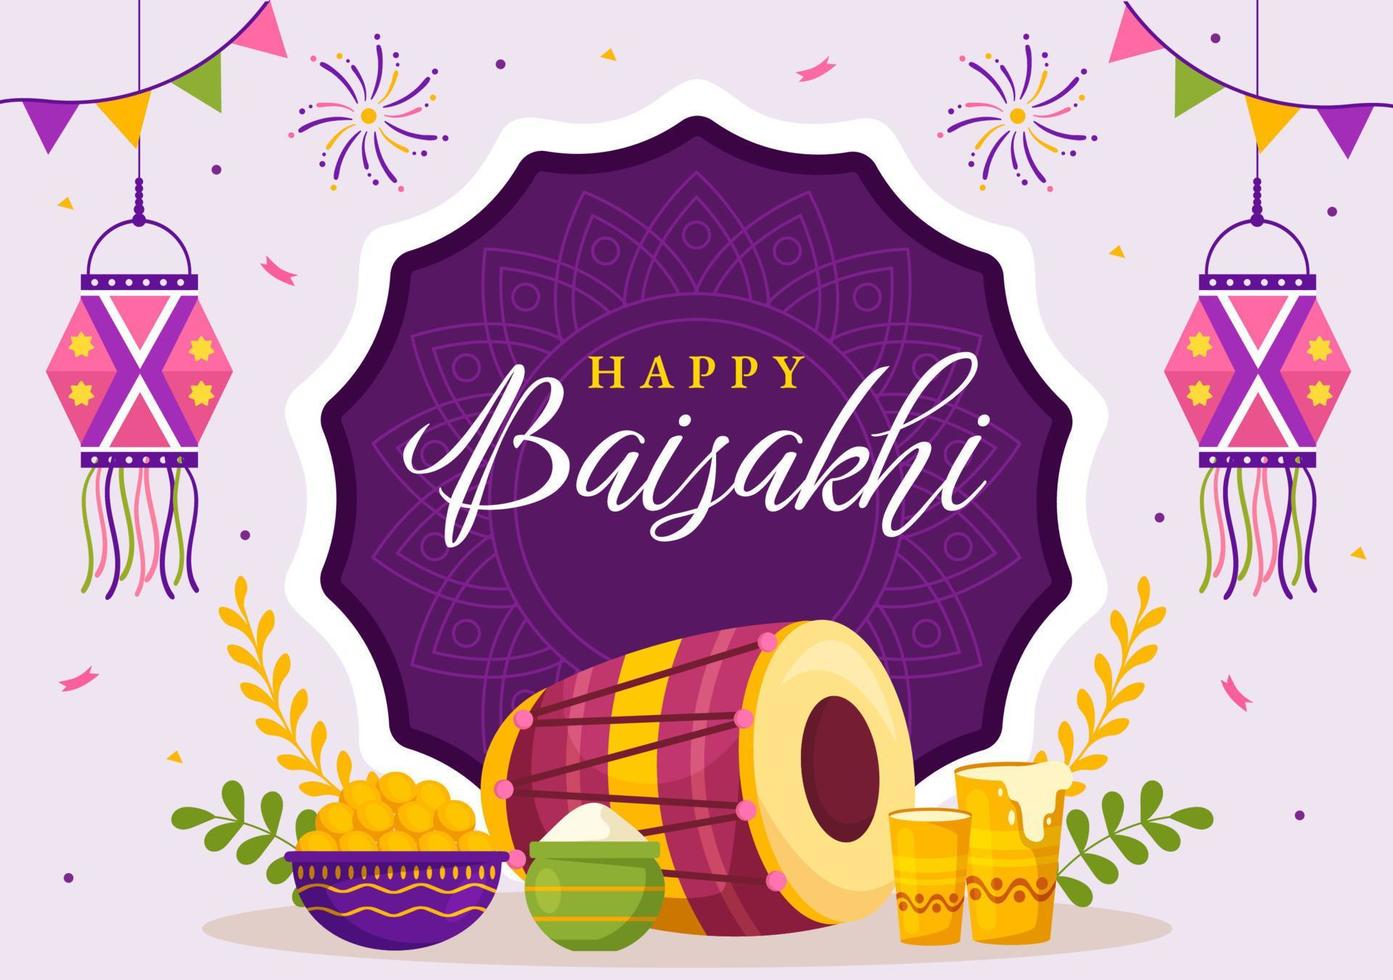 Happy Baisakhi Illustration with Vaisakhi Punjabi Spring Harvest Festival of Sikh celebration in Flat Cartoon Hand Drawn for Landing Page Templates vector